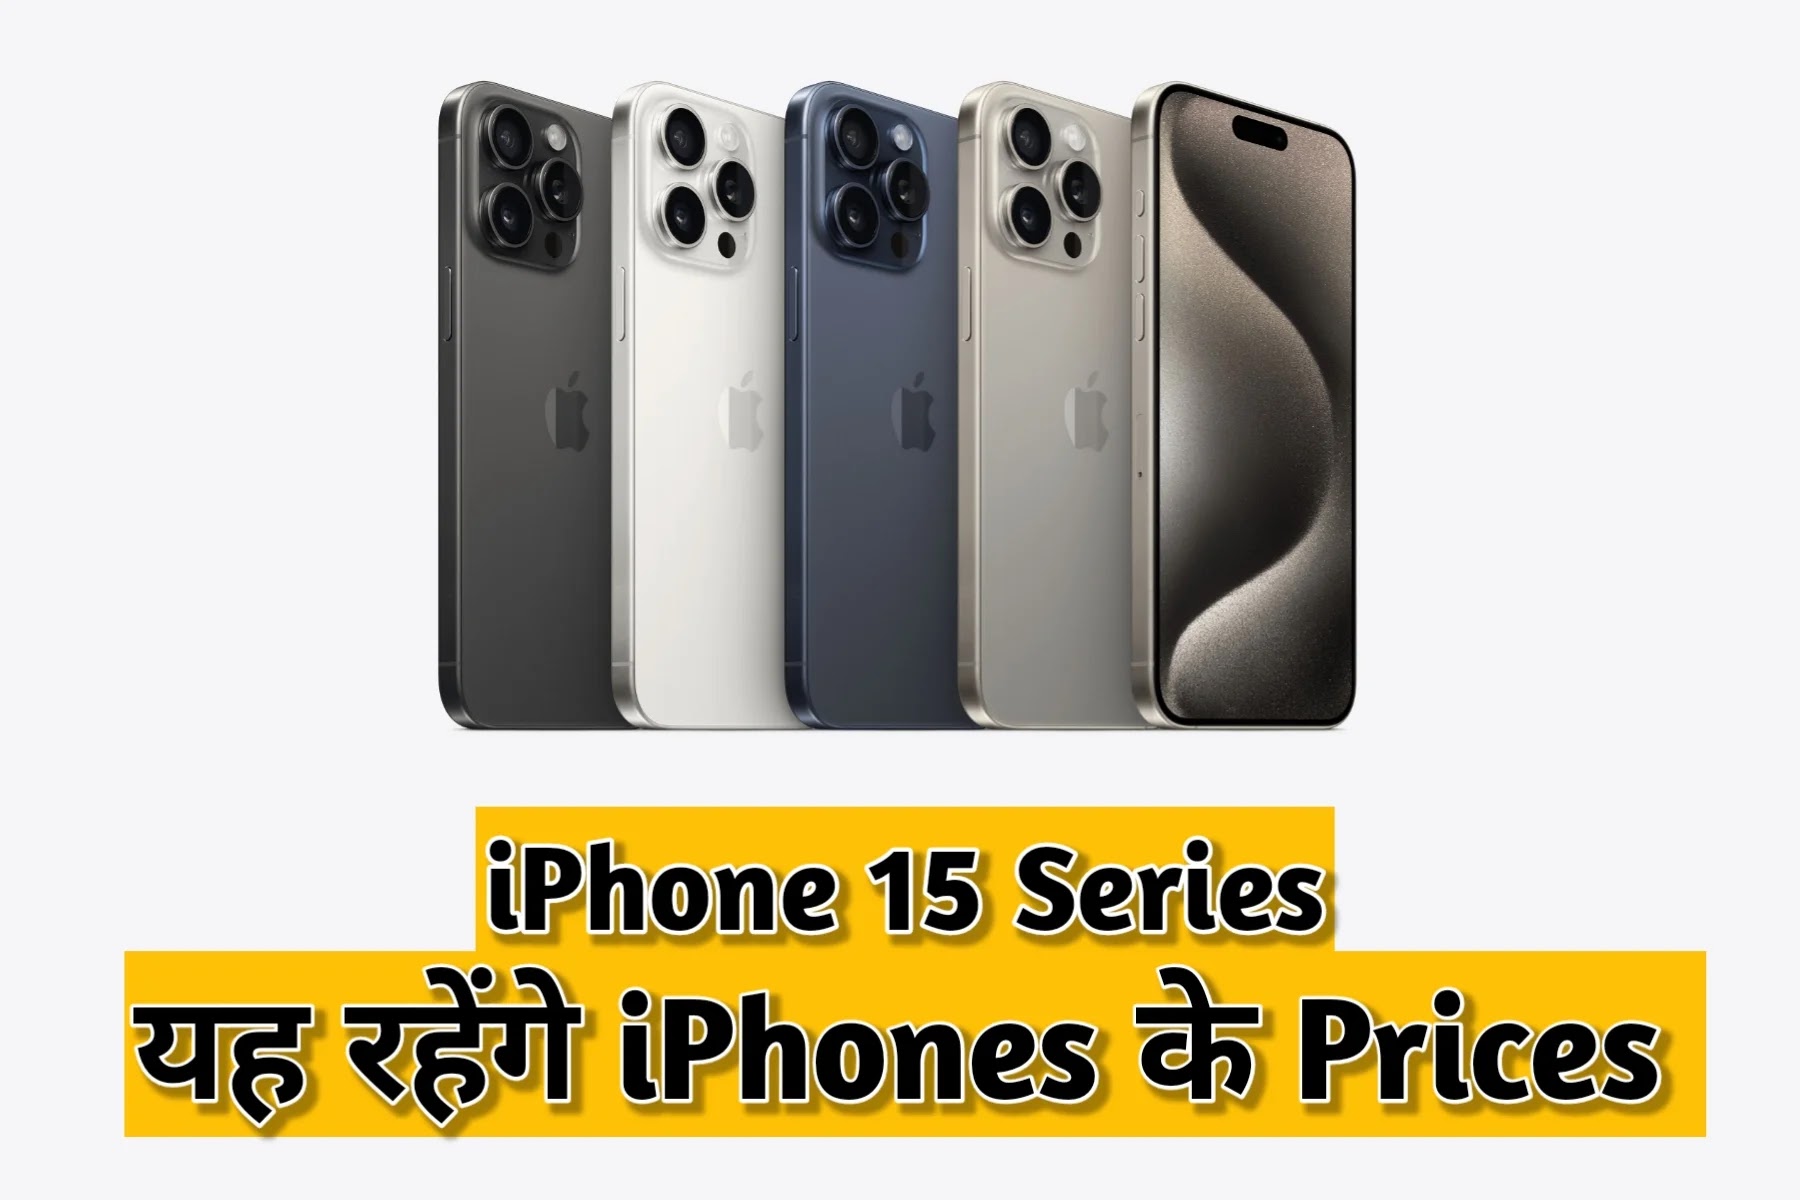 iPhones 15 Series price in Hindi